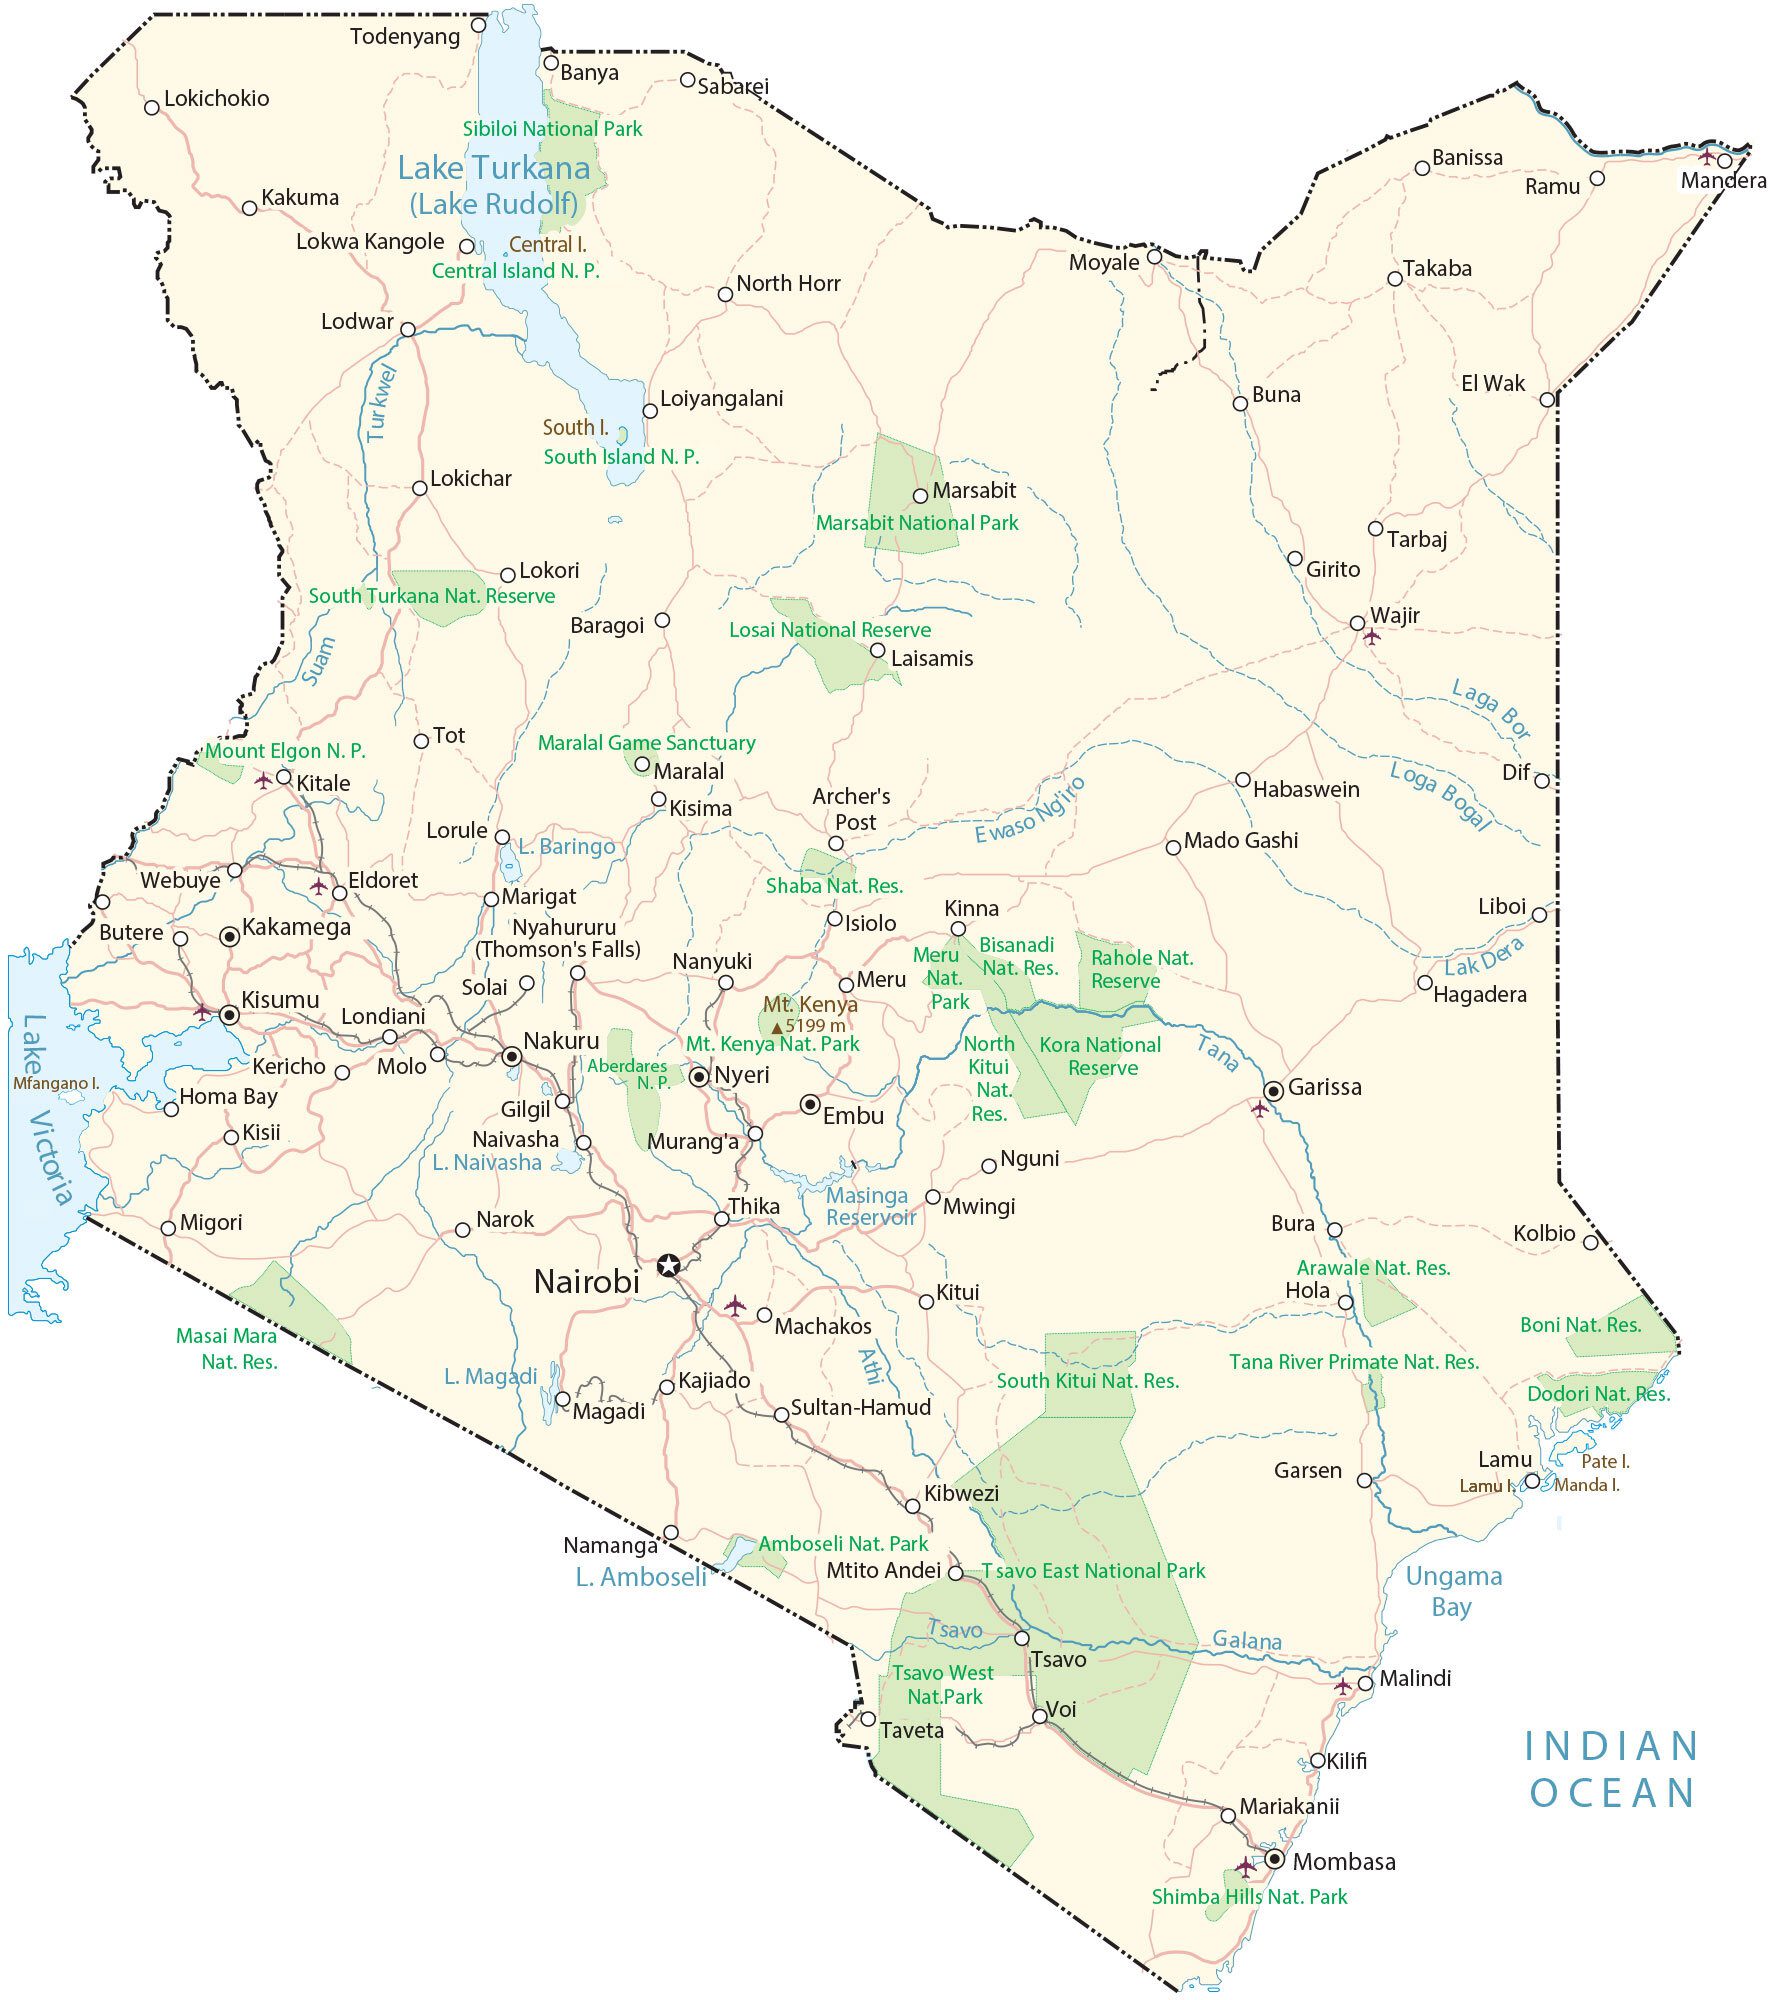 Mappa del Kenya